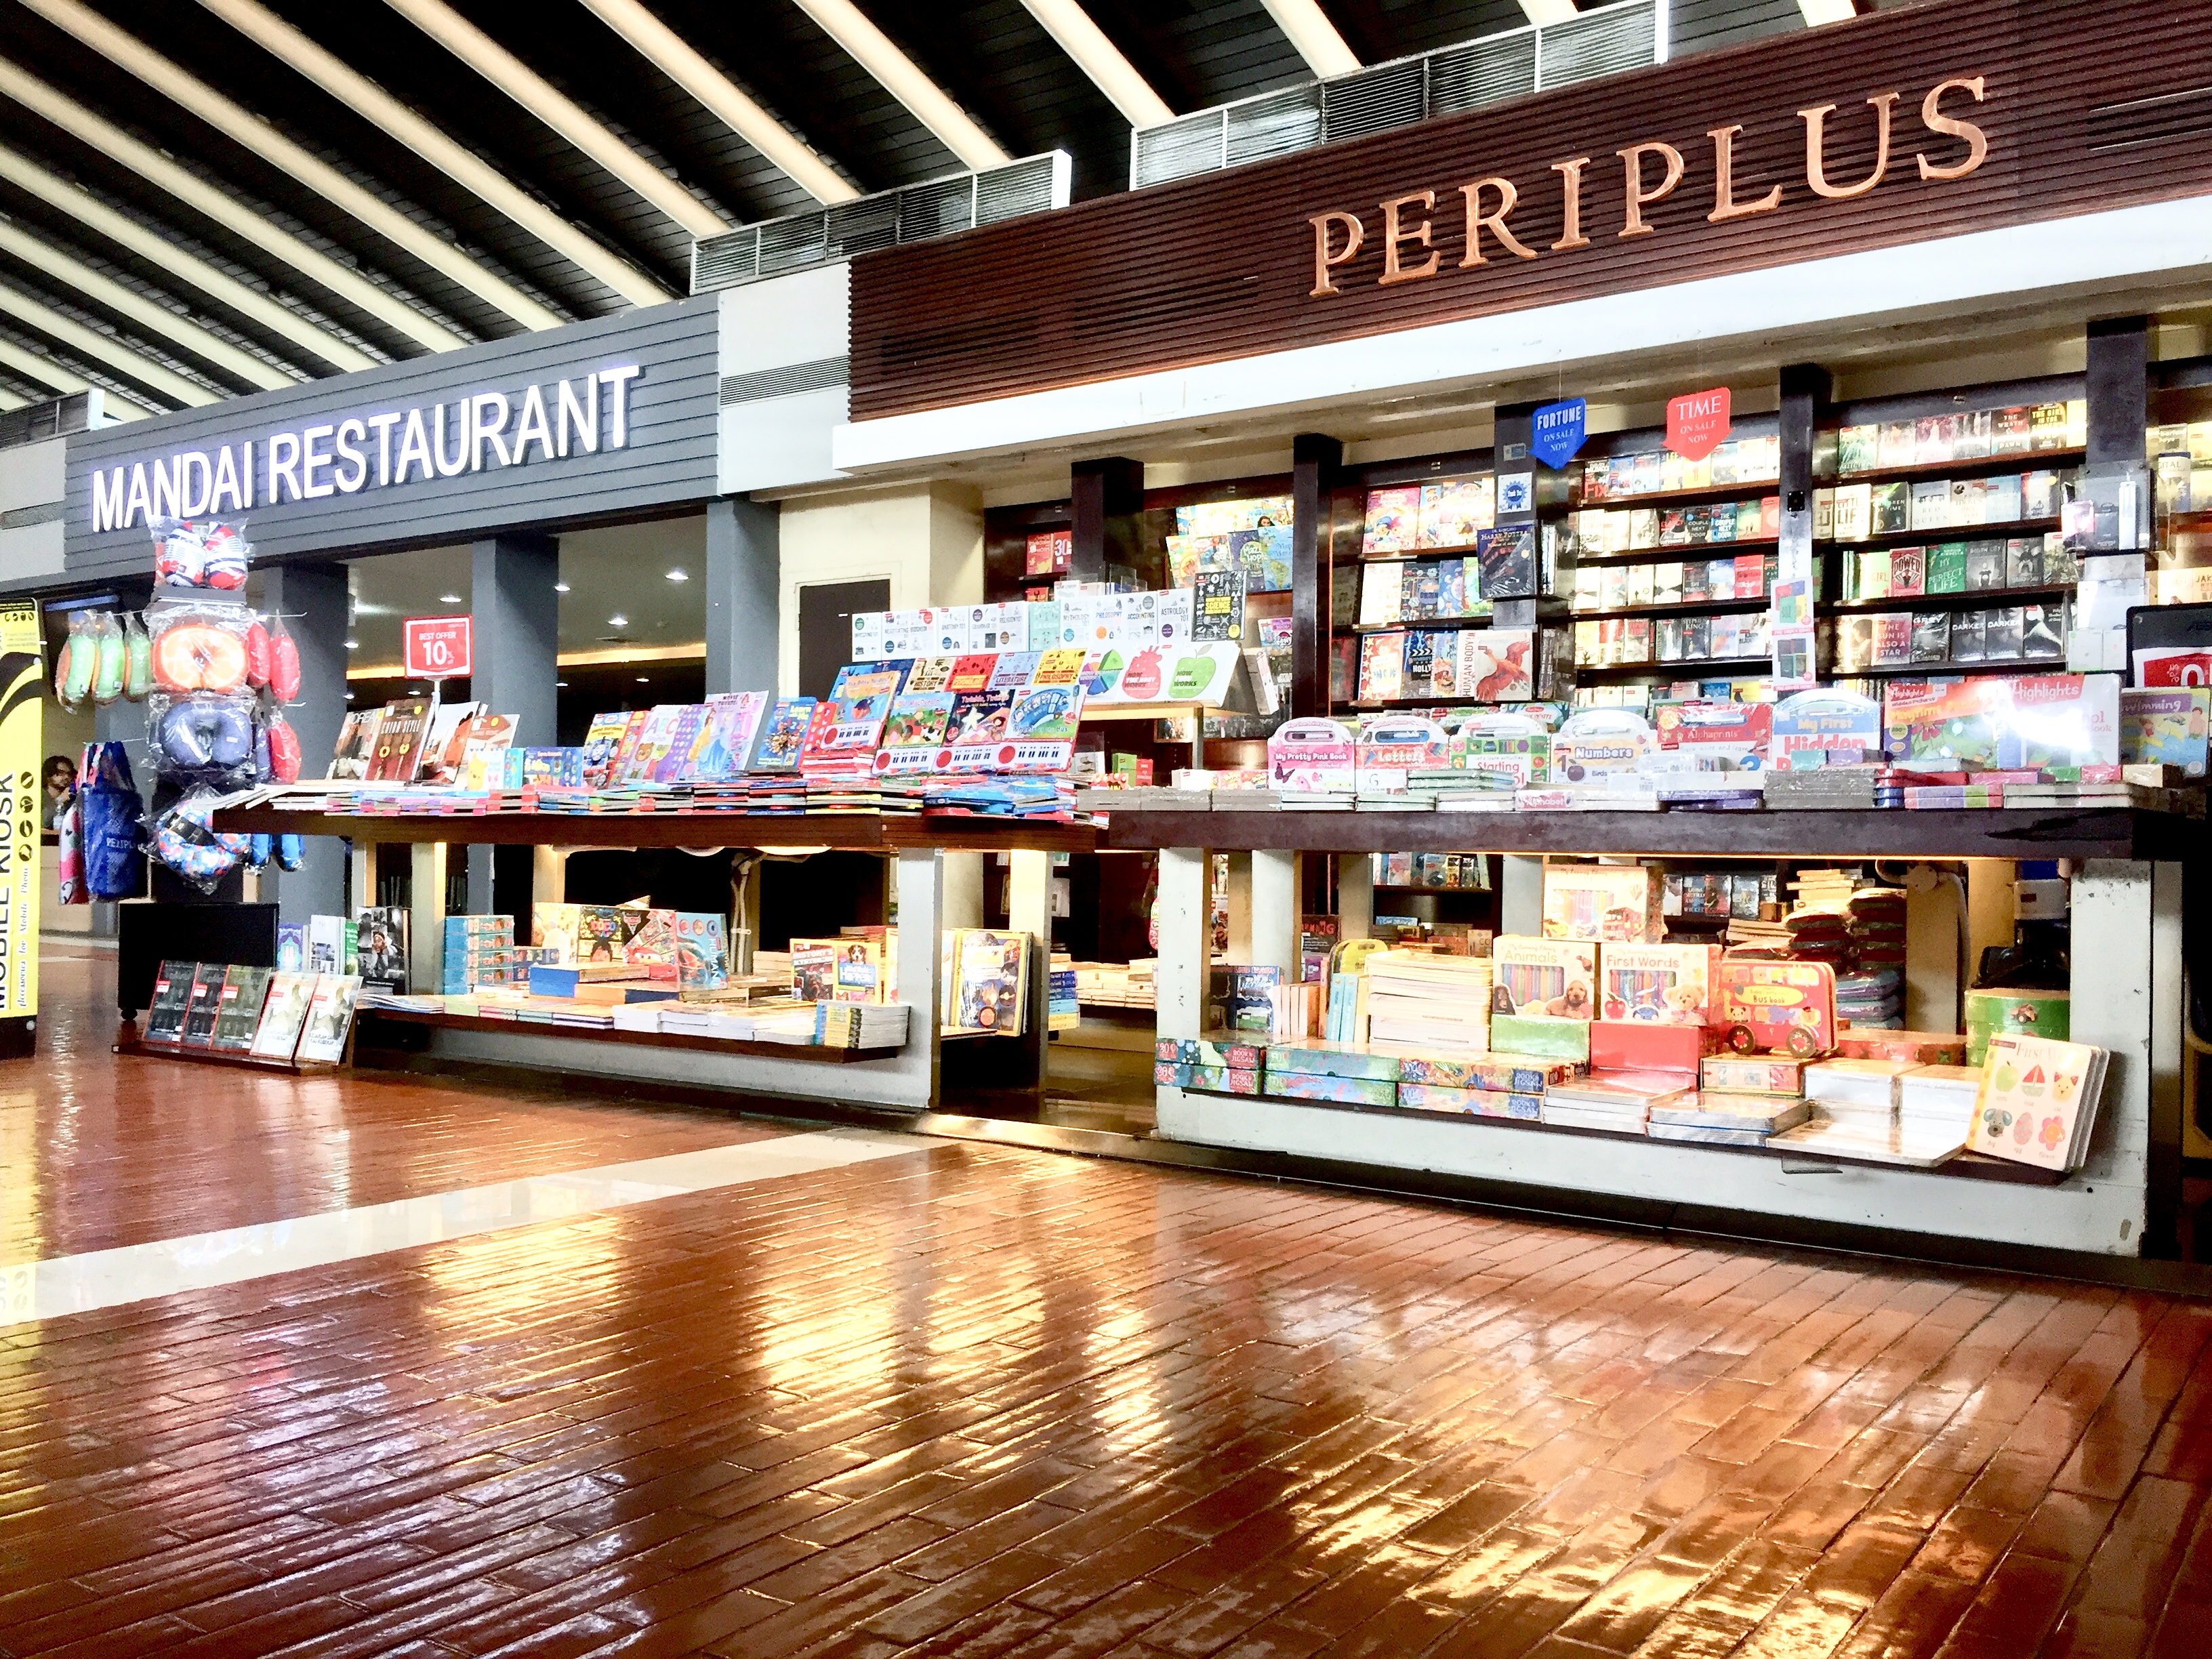 Periplus bookstore and Mandai Restaurant at  Soekarno Hatta International Airport